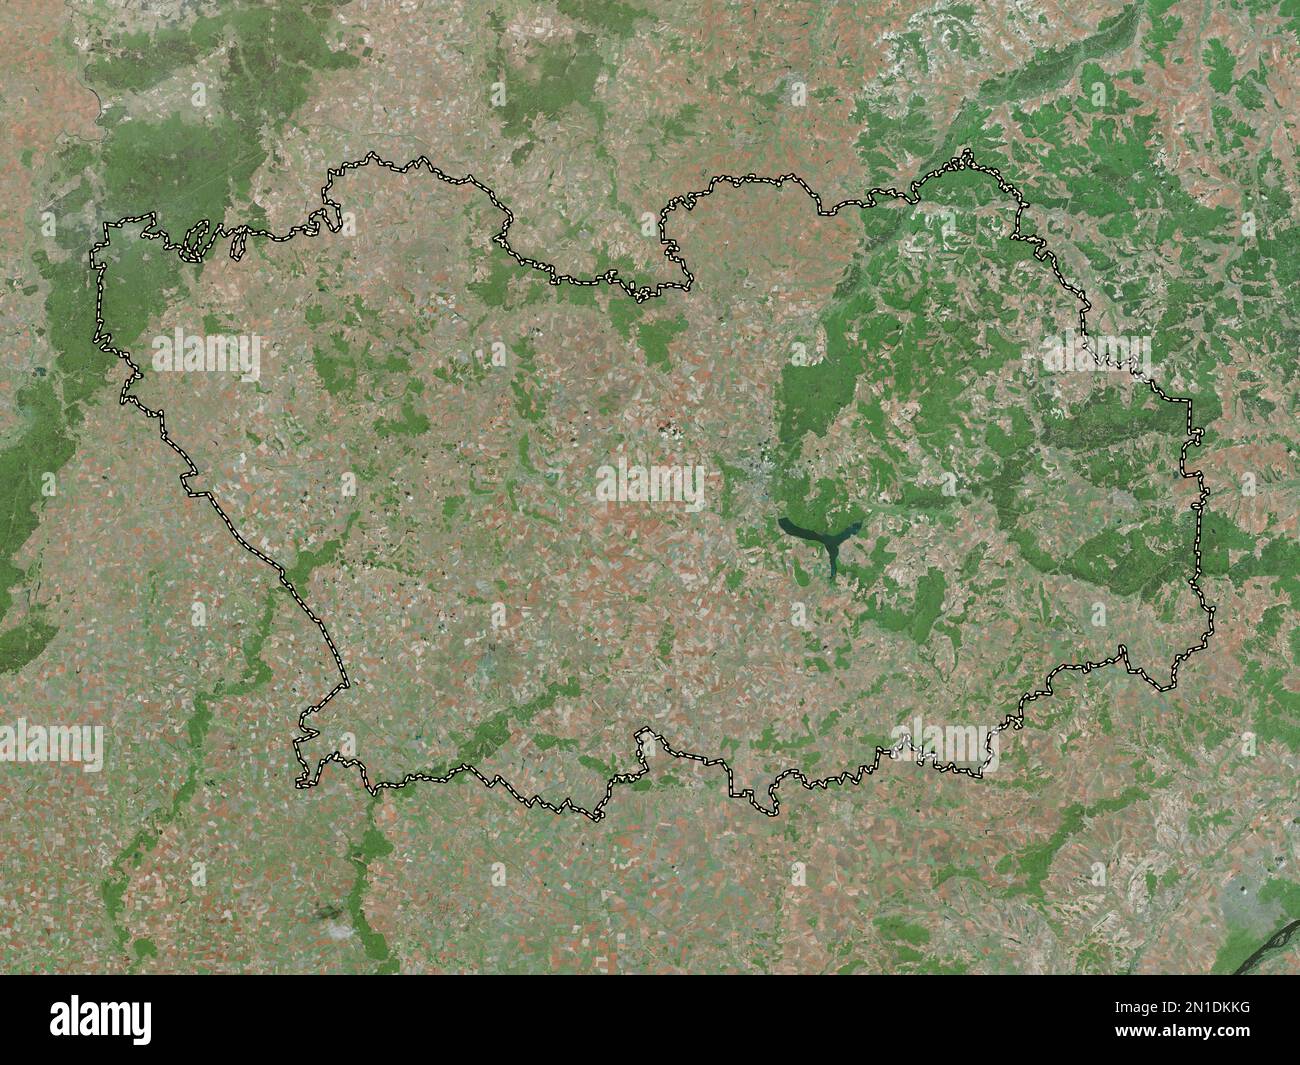 Penza, region of Russia. High resolution satellite map Stock Photo